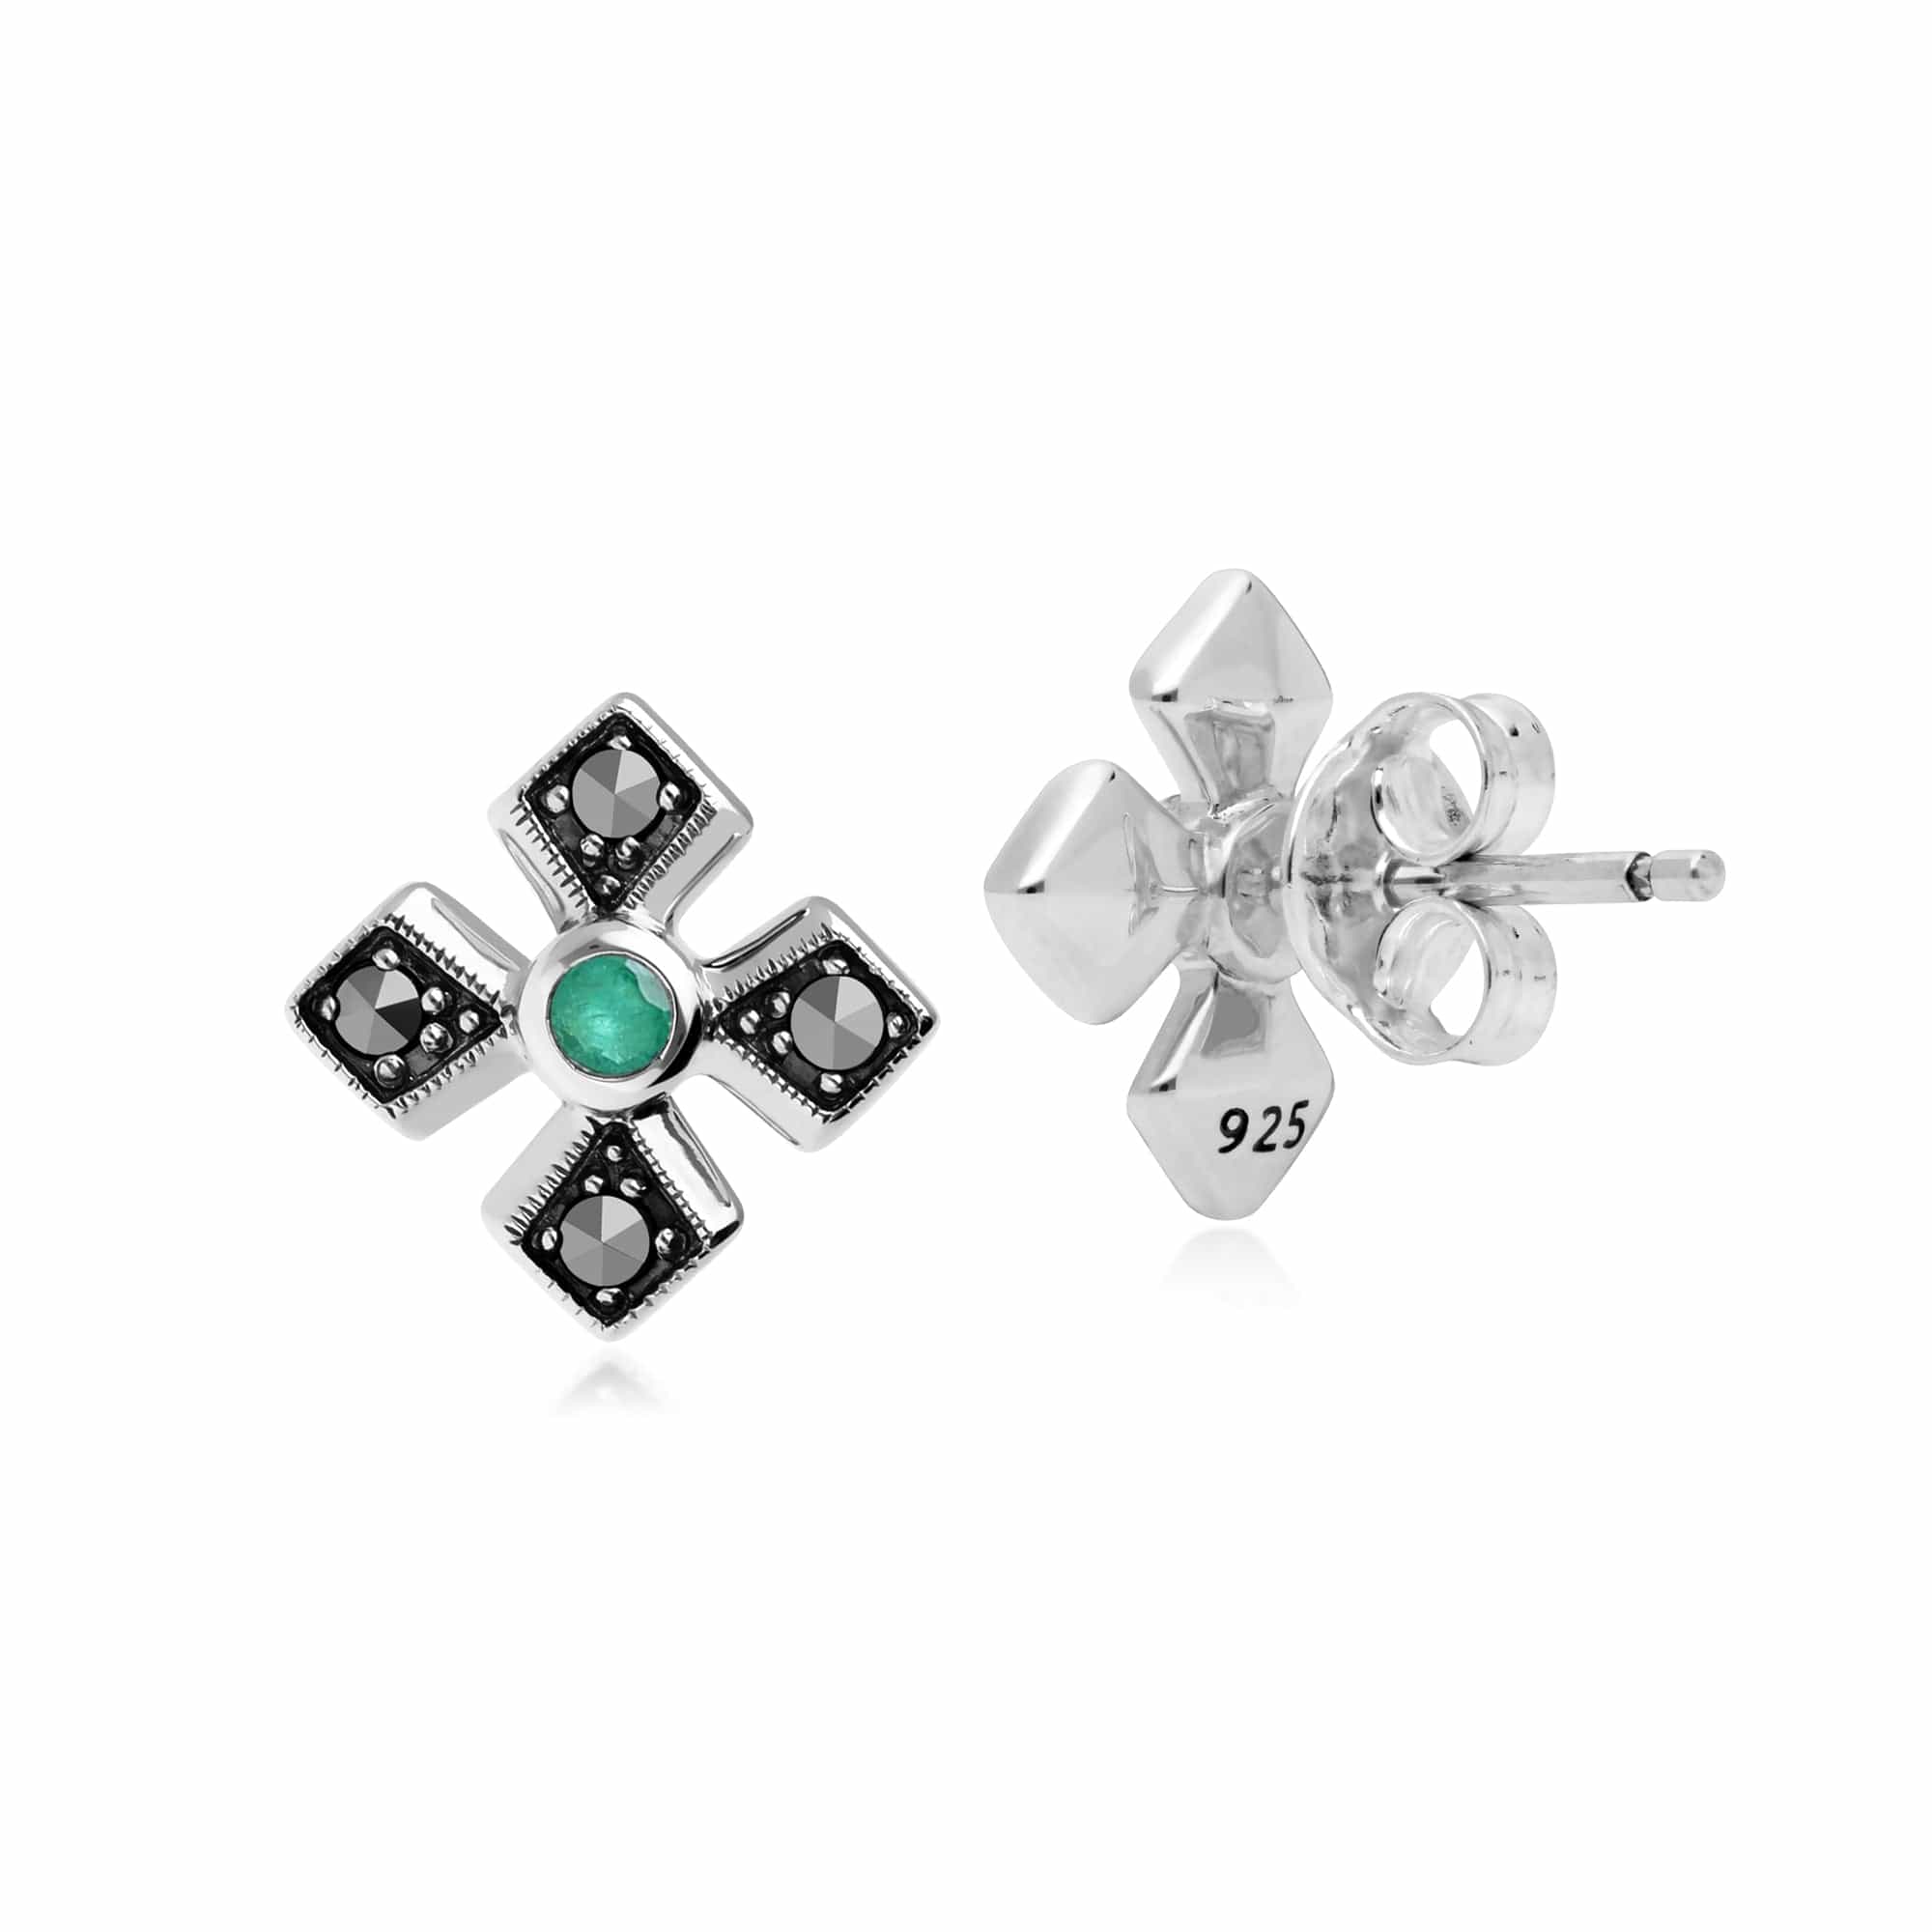 Gemondo Sterling Silver Marcasite & Emerald May Birthstone Earrings - Gemondo